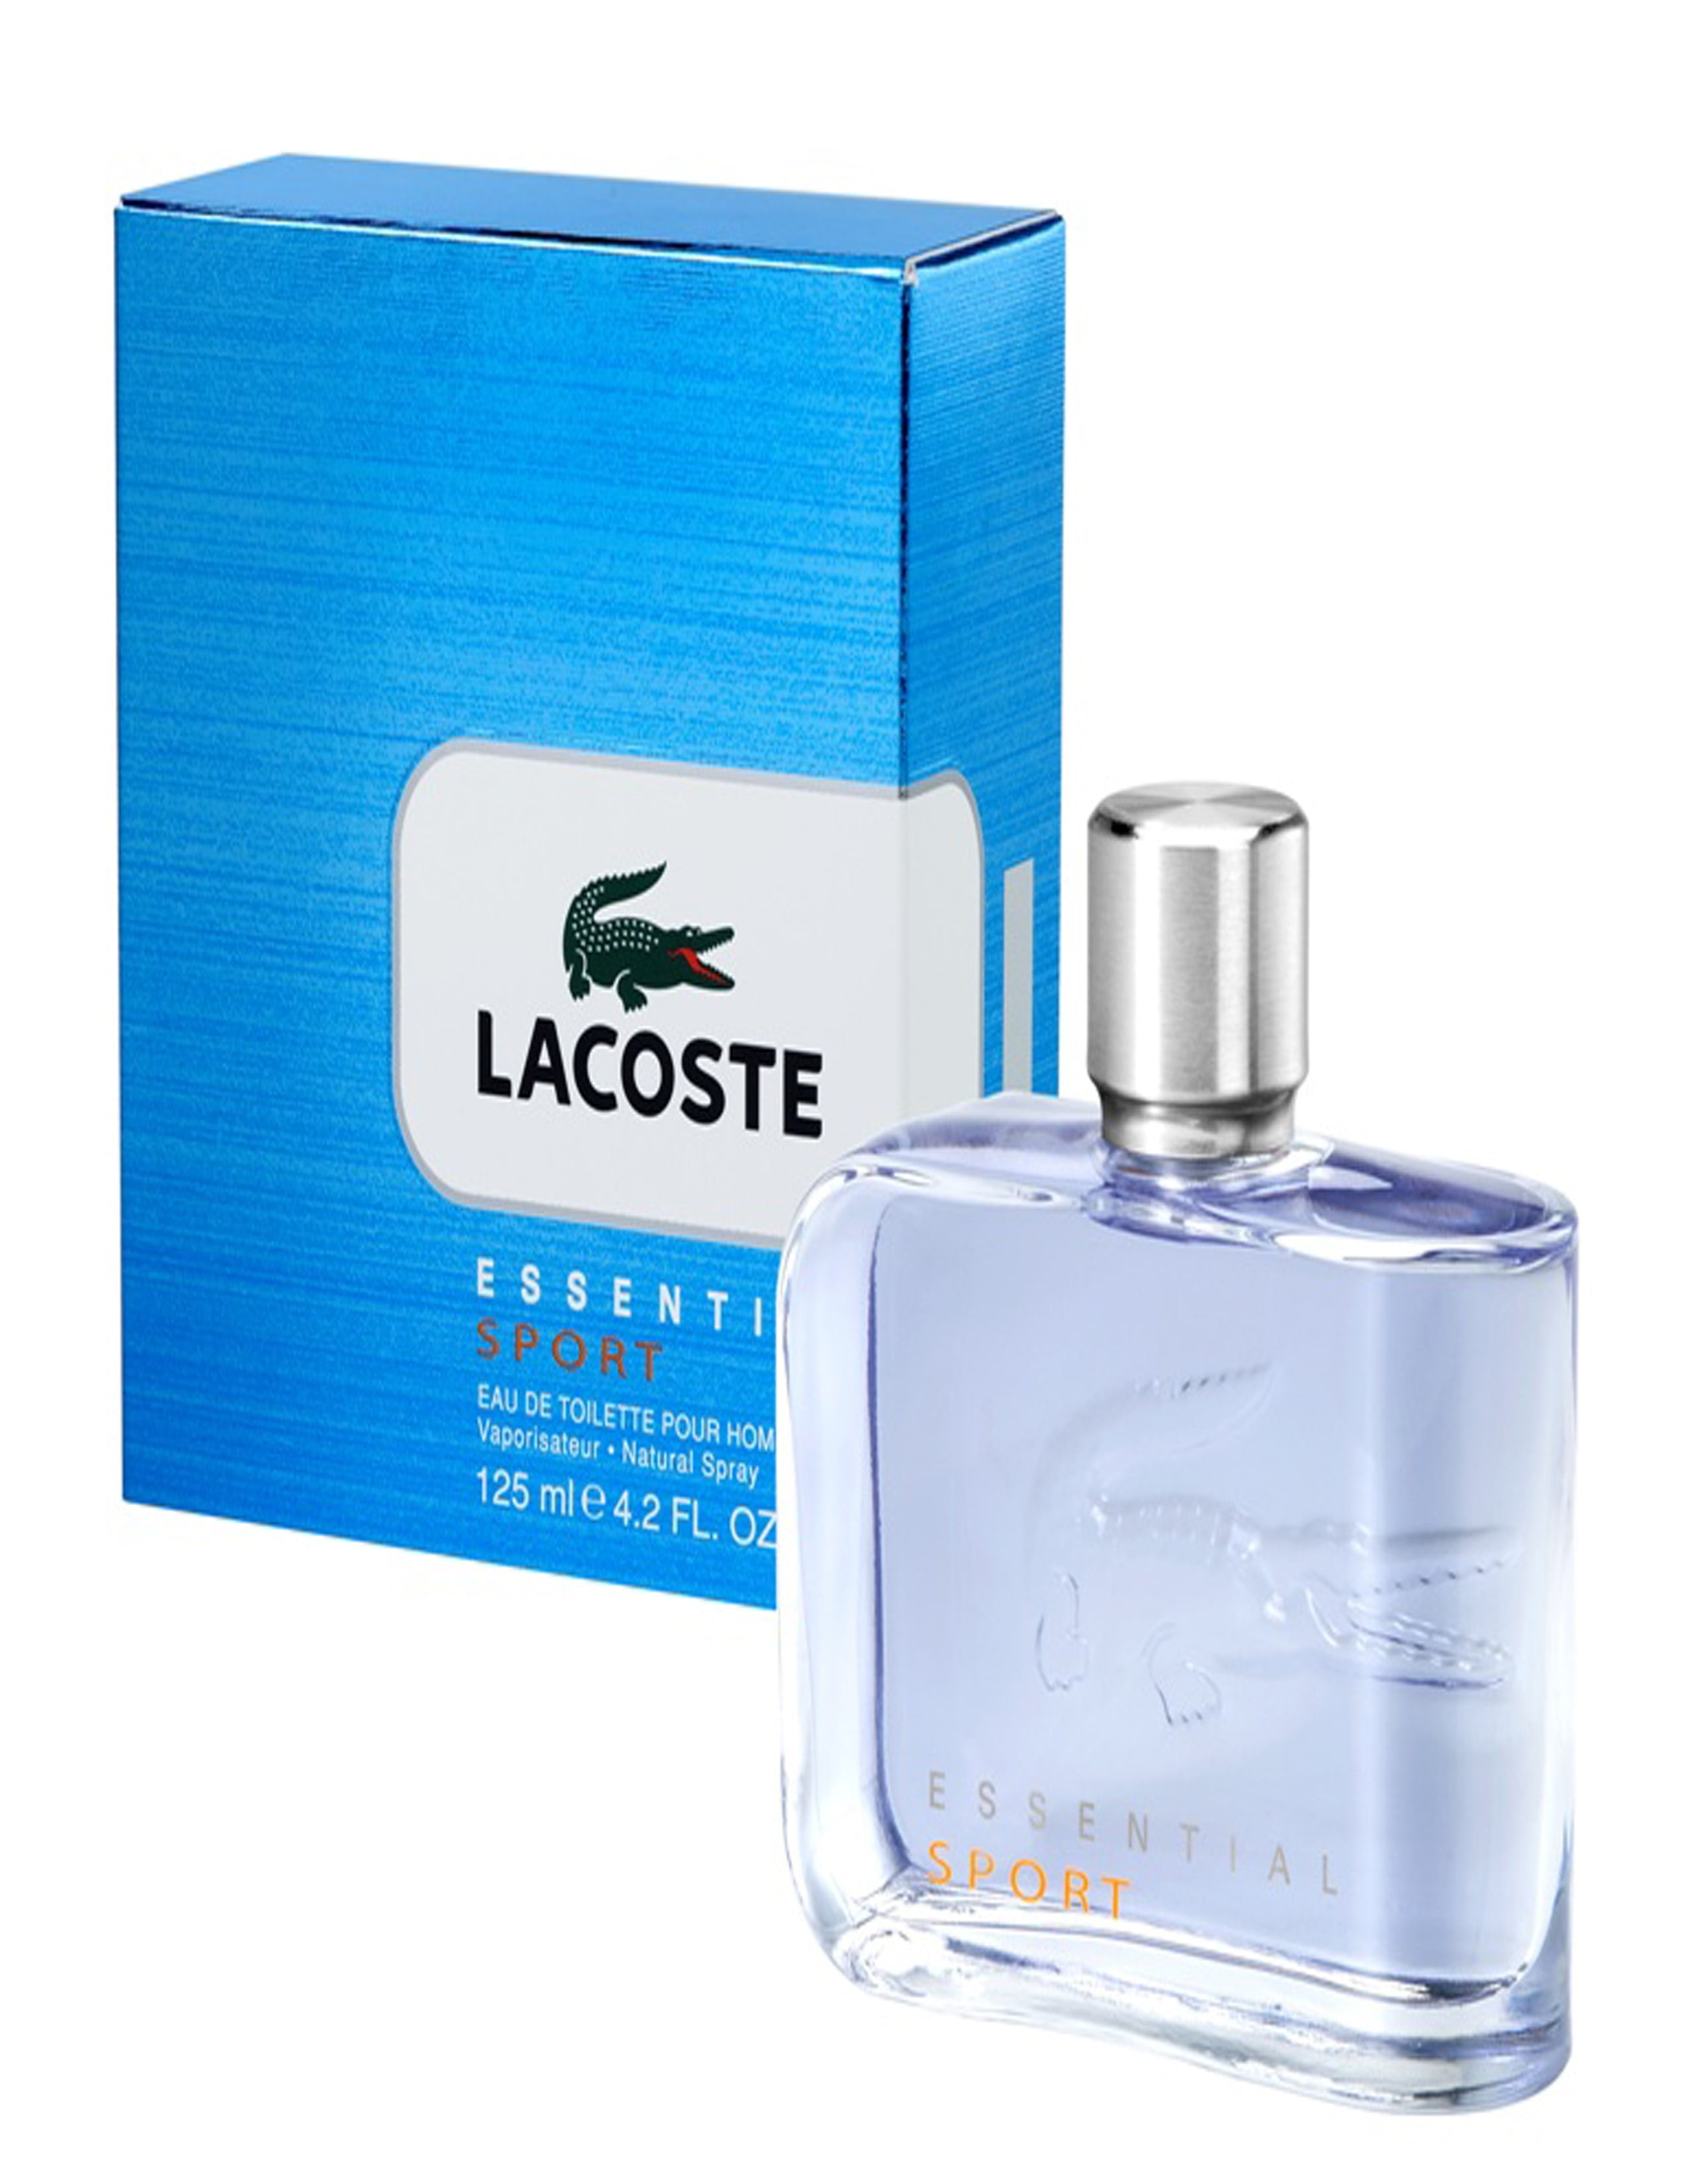 Wallpaper Lacoste Sport, Mens Perfume, Fragrance, Lacoste Wallpaper, Other